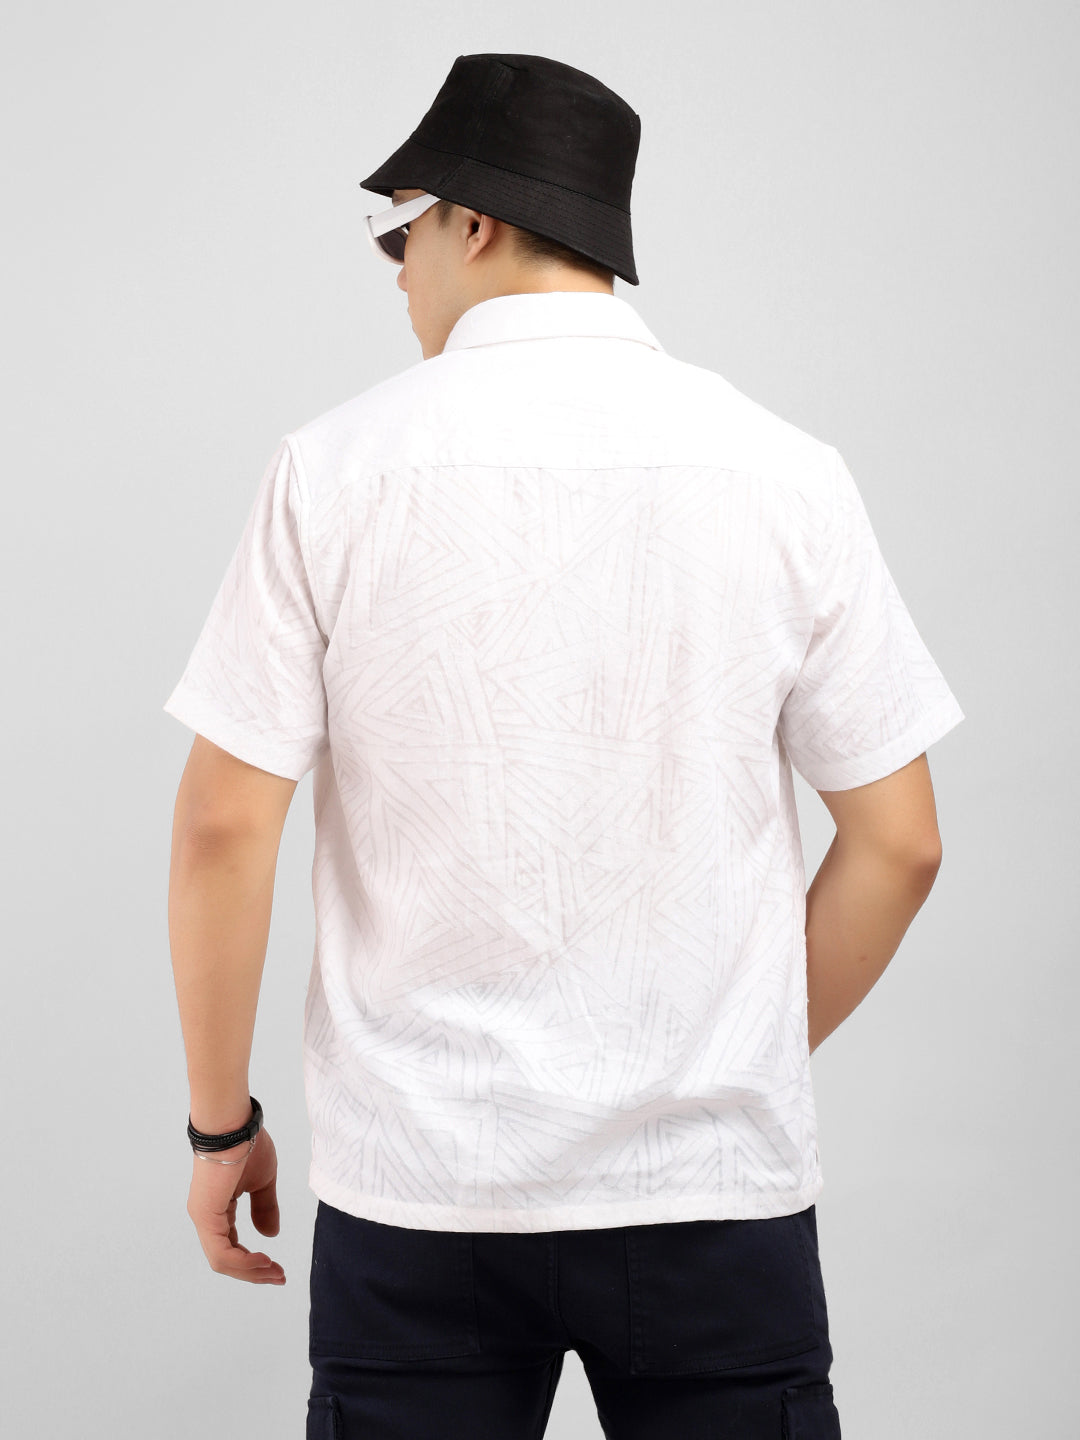 Slumberquilt White Self-Design Half Sleeve Shirt